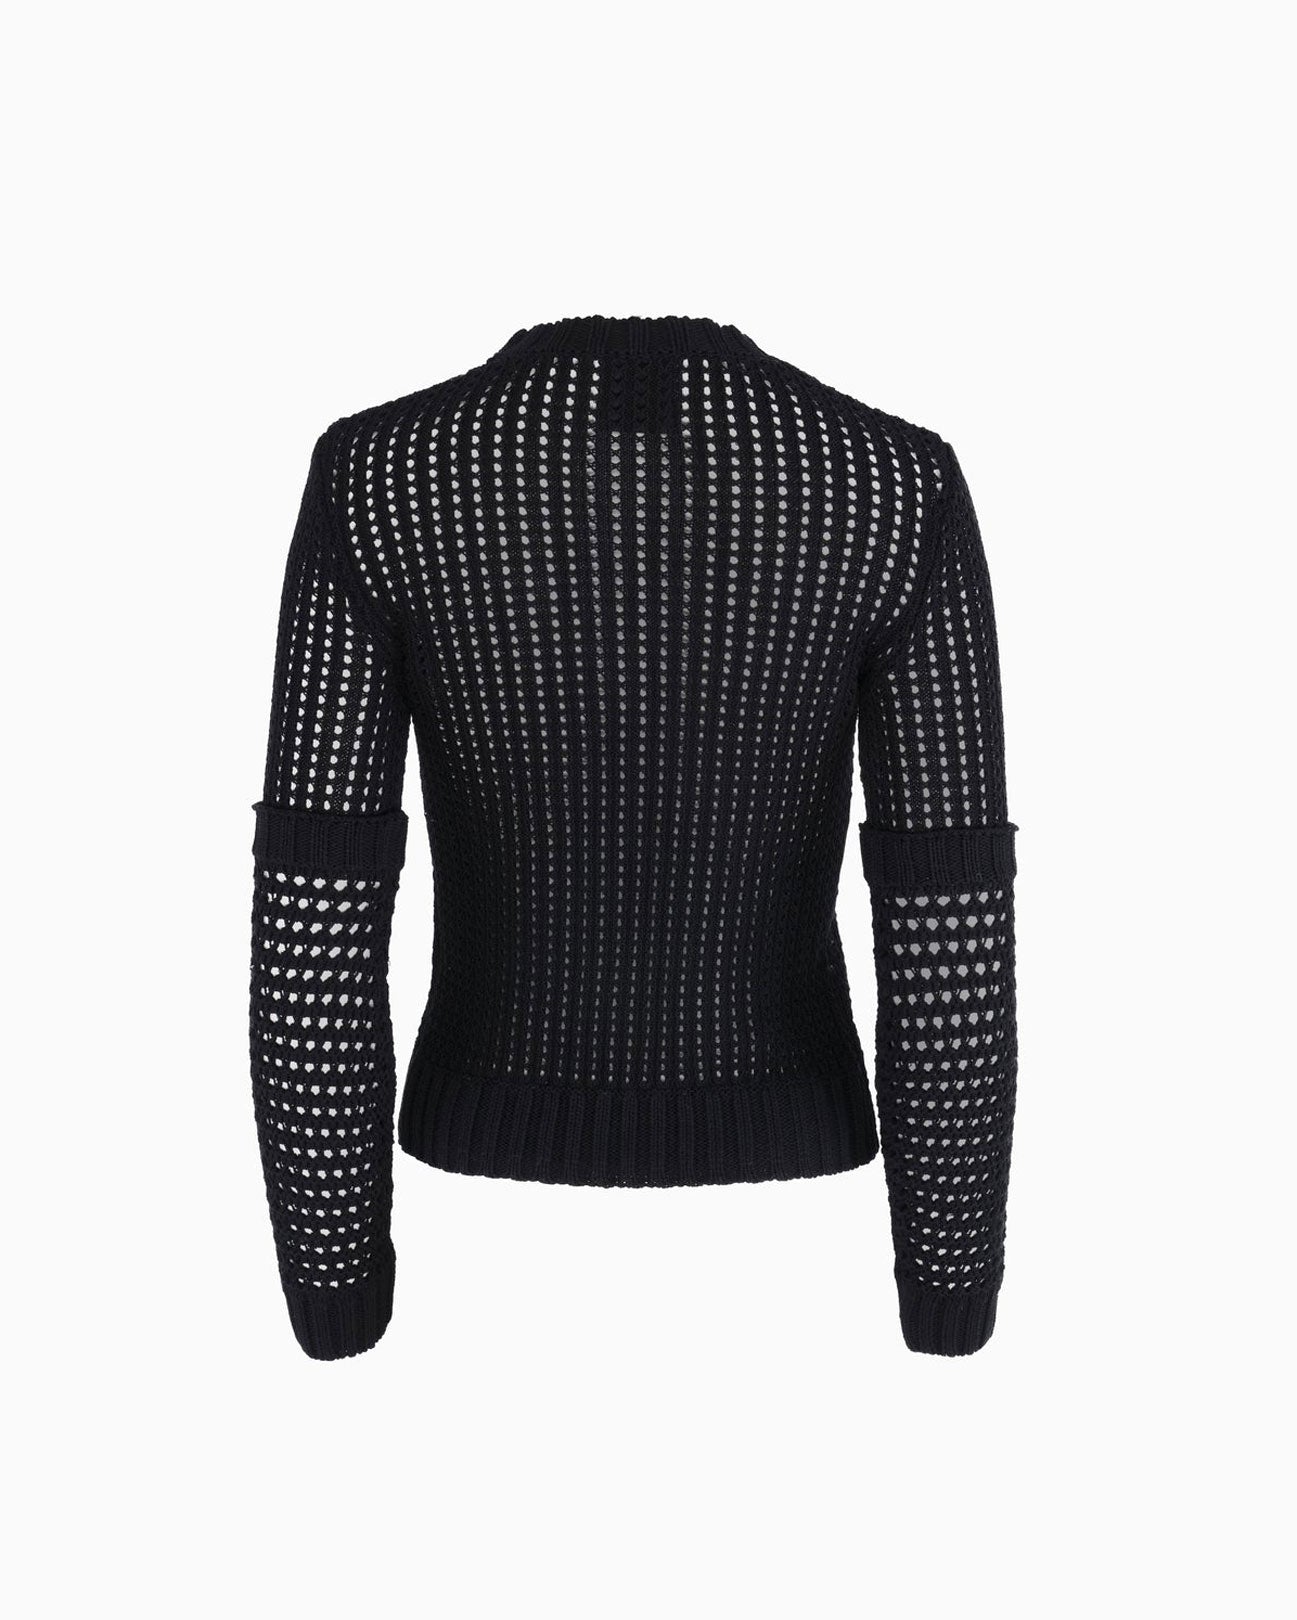 AKNVAS Prado Knit Top in Black available at Lahn.shop